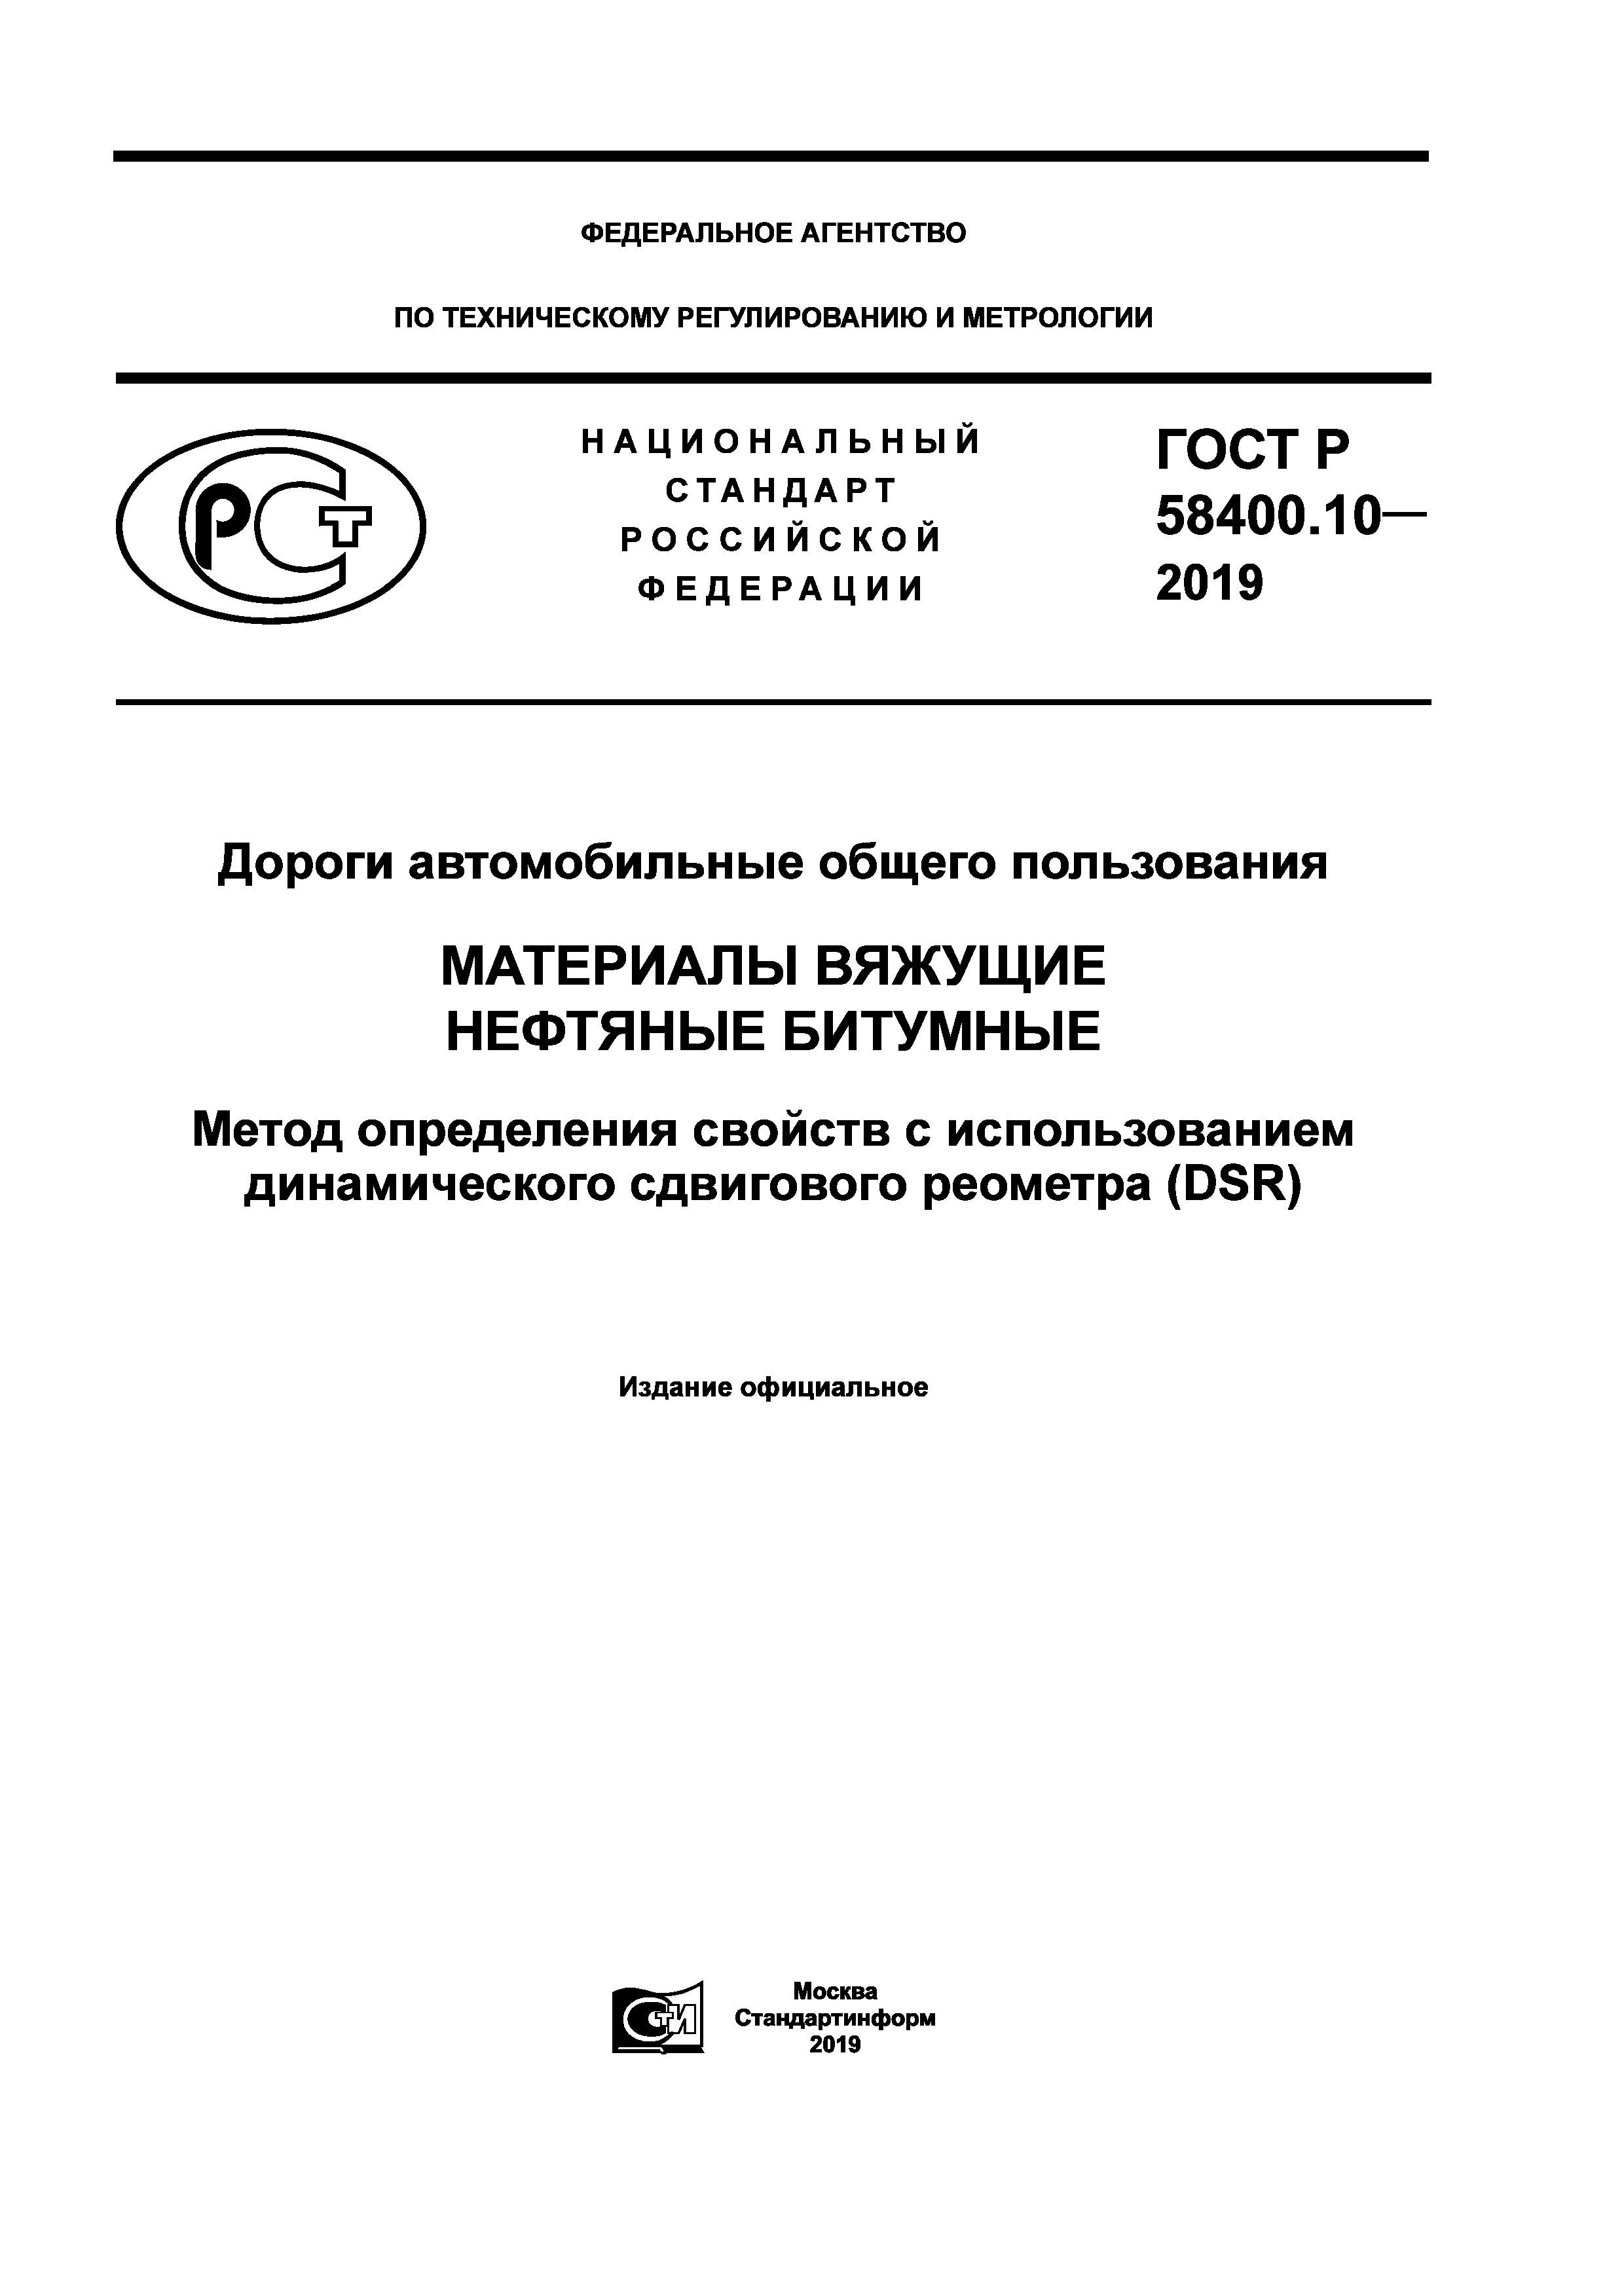 ГОСТ Р 58400.10-2019